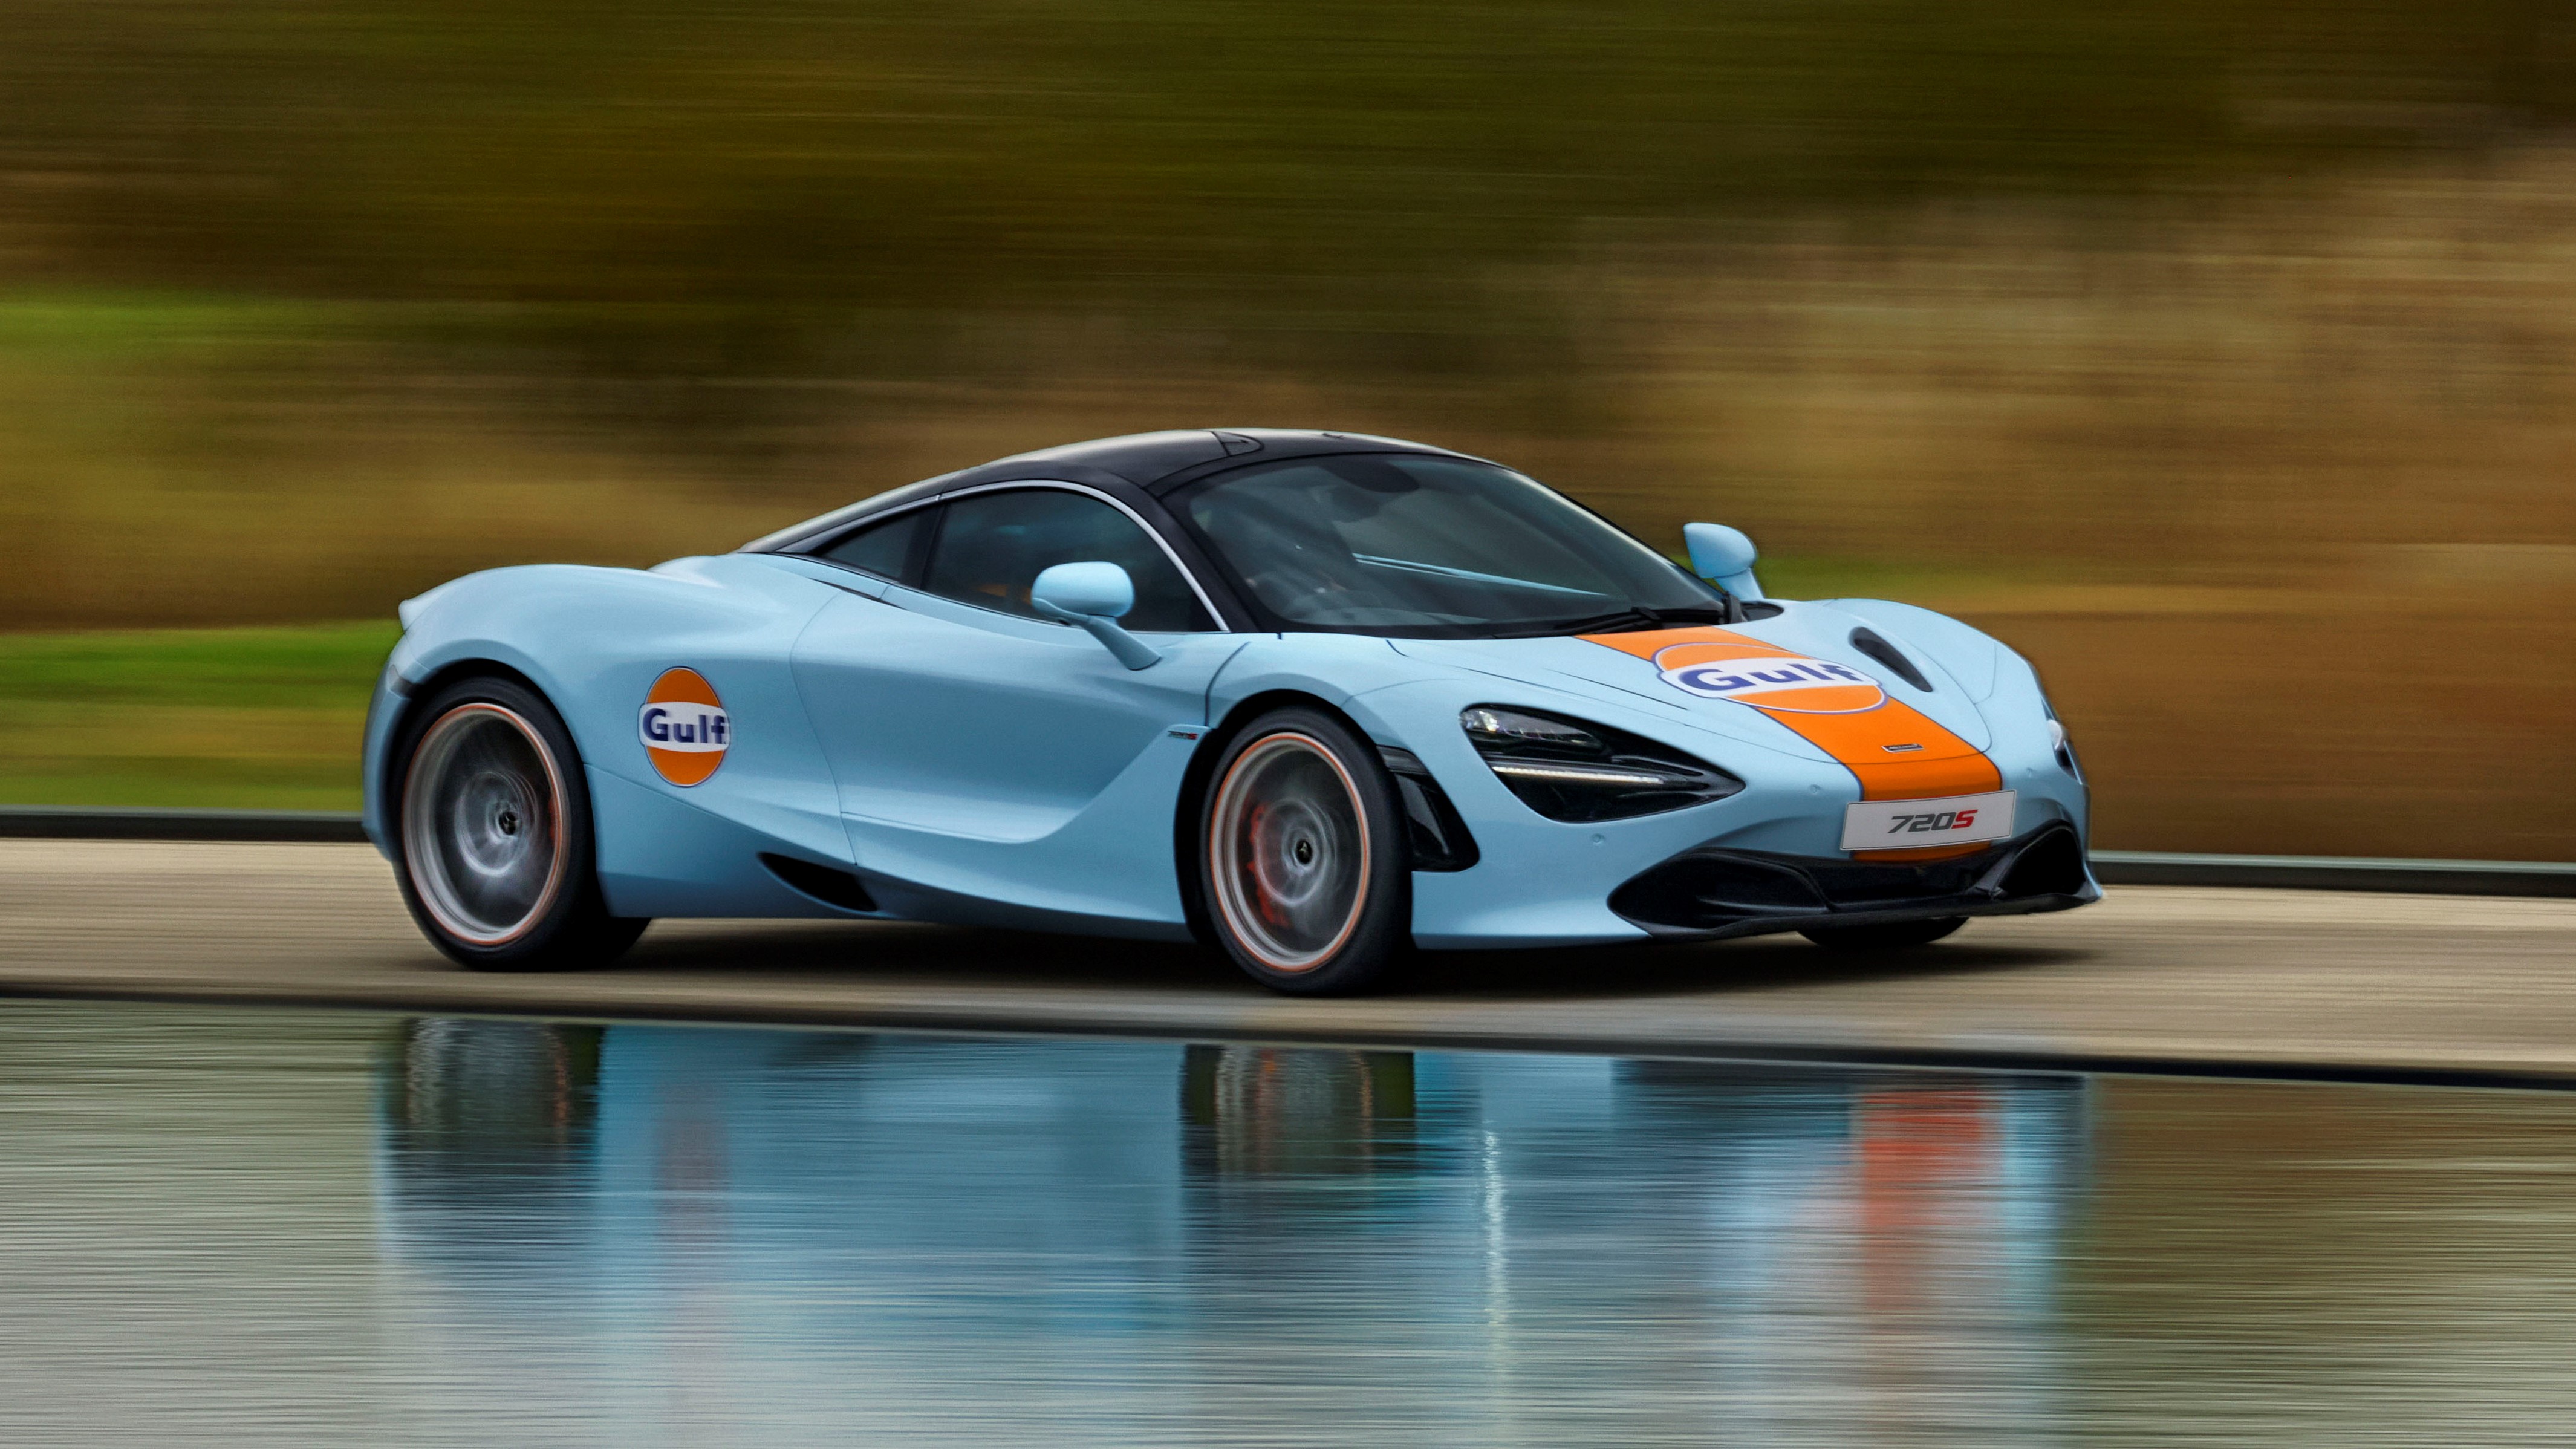 McLaren Paints A Legendary Future With Gulf Oil Partner